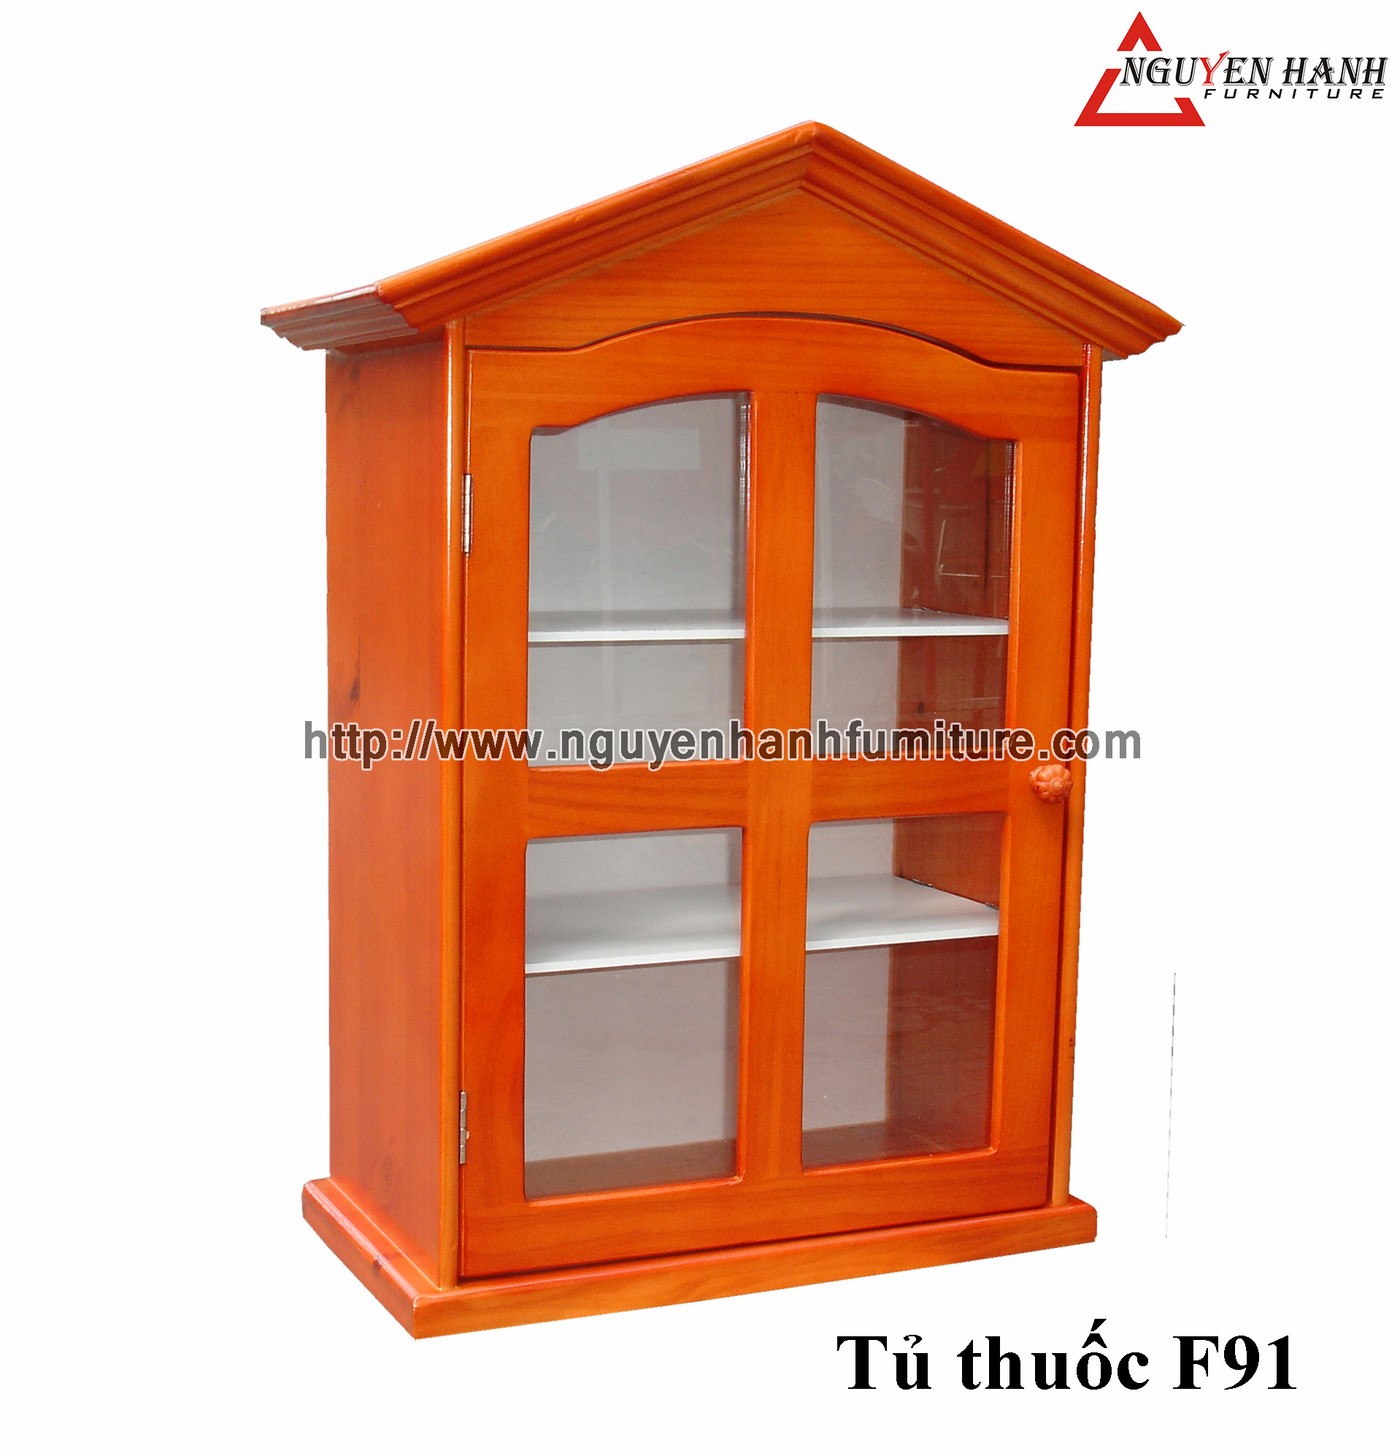 Name product: Medicine cabinet F91 - Dimensions: - Description: Natural pine wood